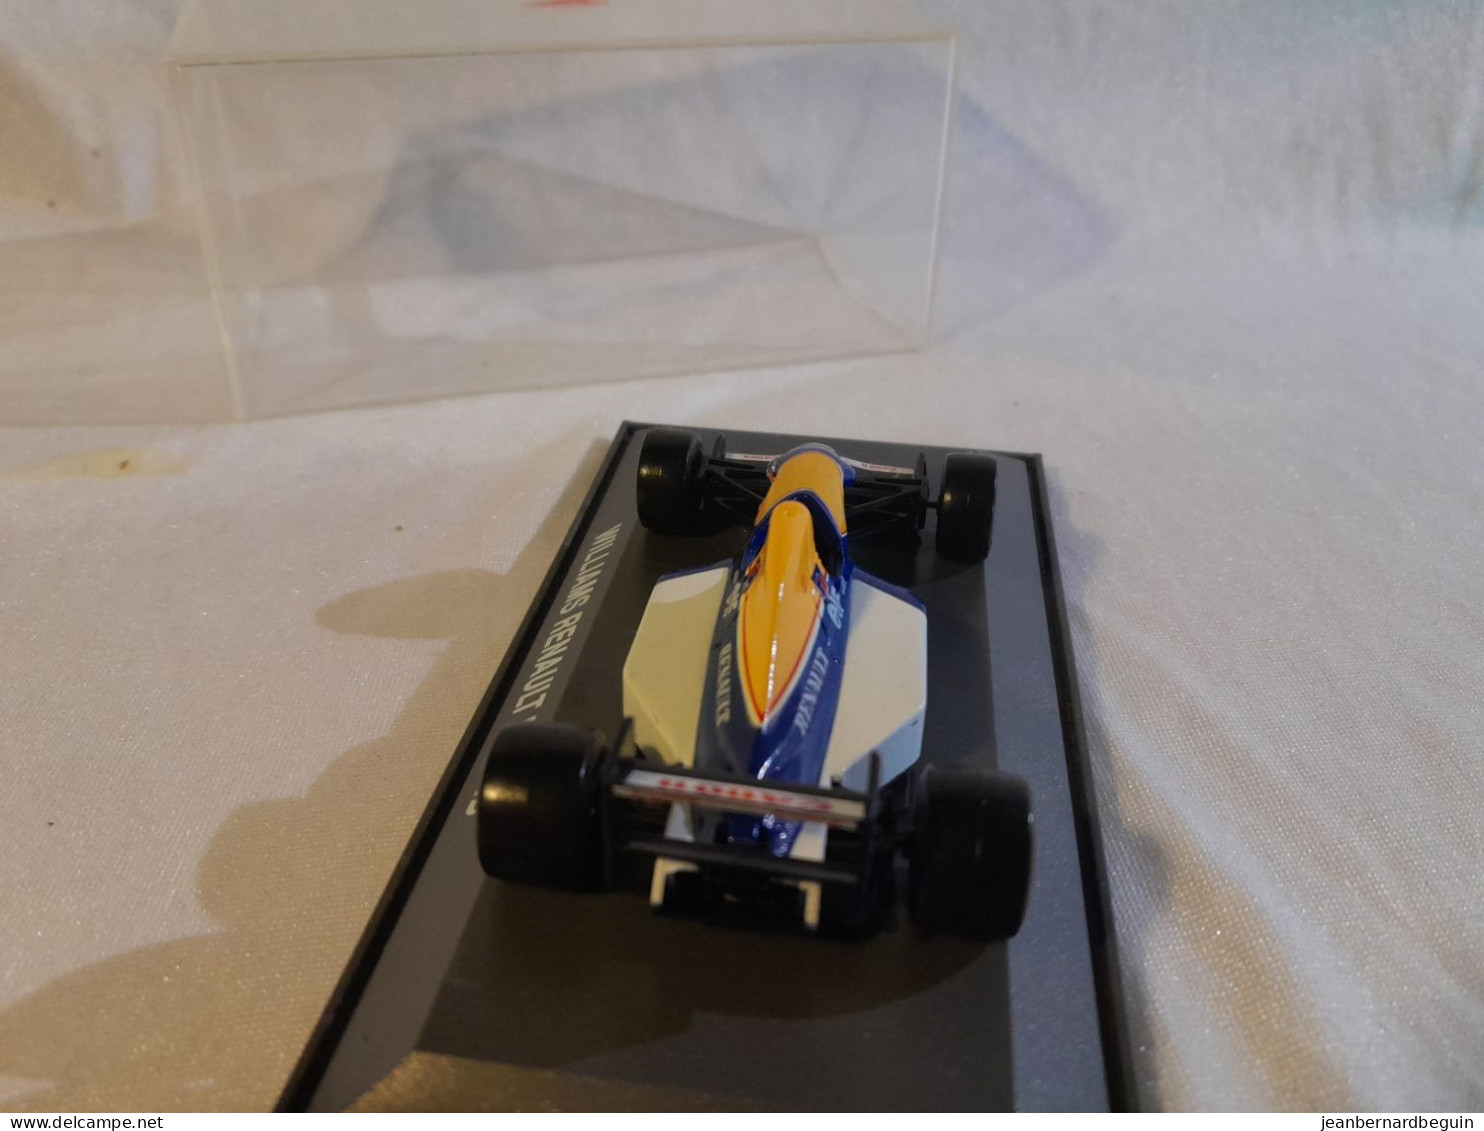 Voiture Miniature Kyosho  F1 Williams - Kyosho